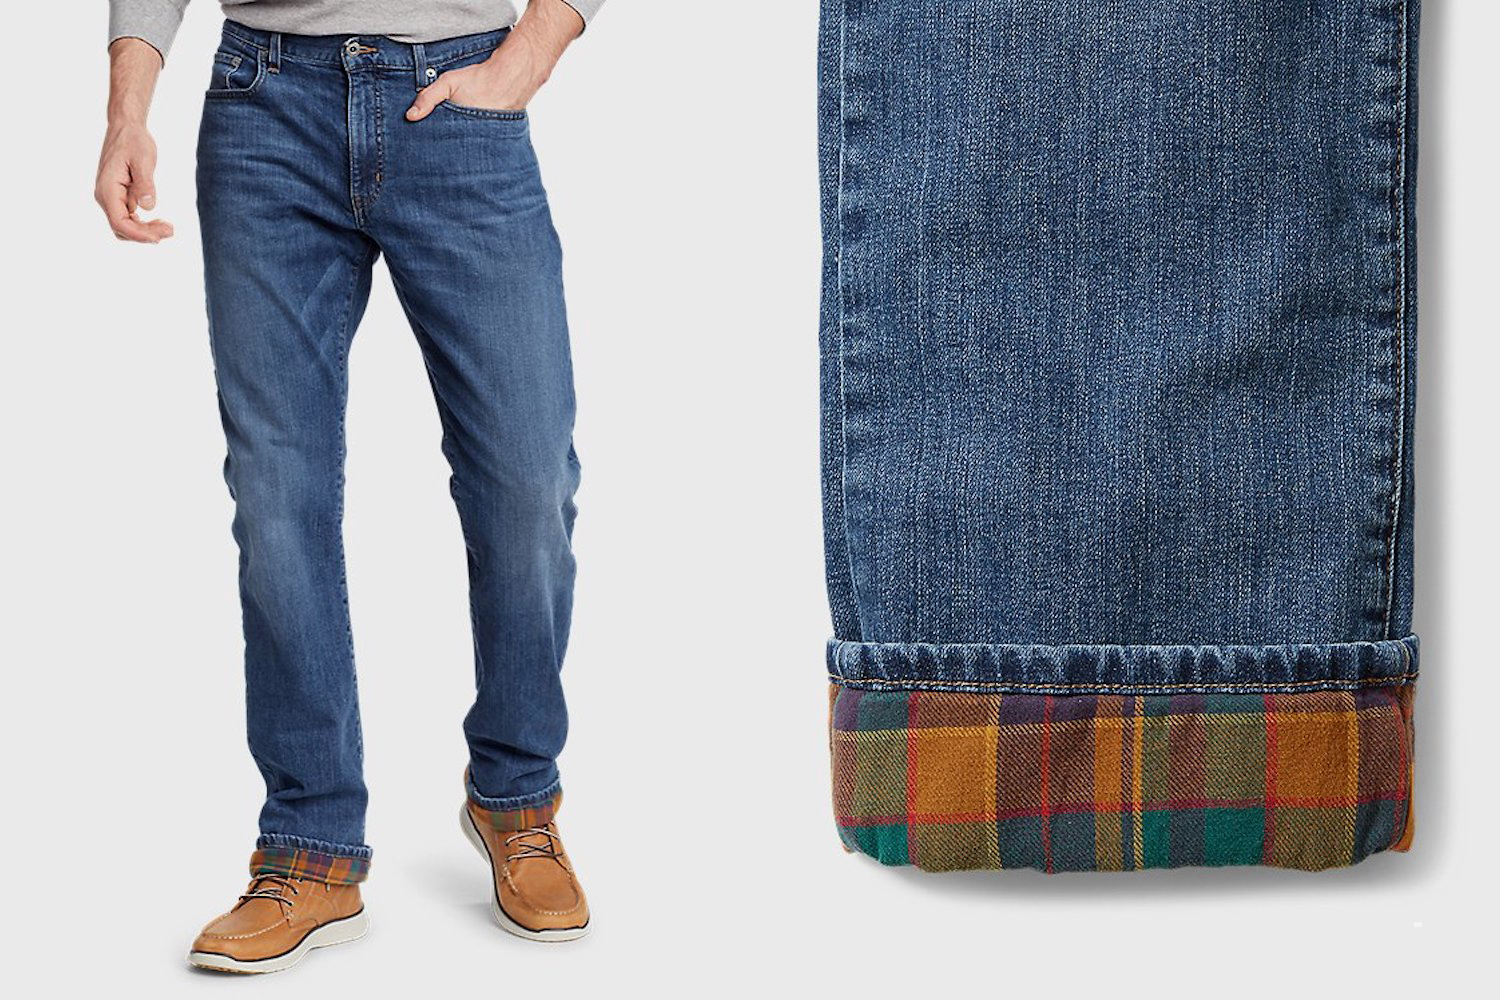 Eddie Bauer flannel lined jeans for men